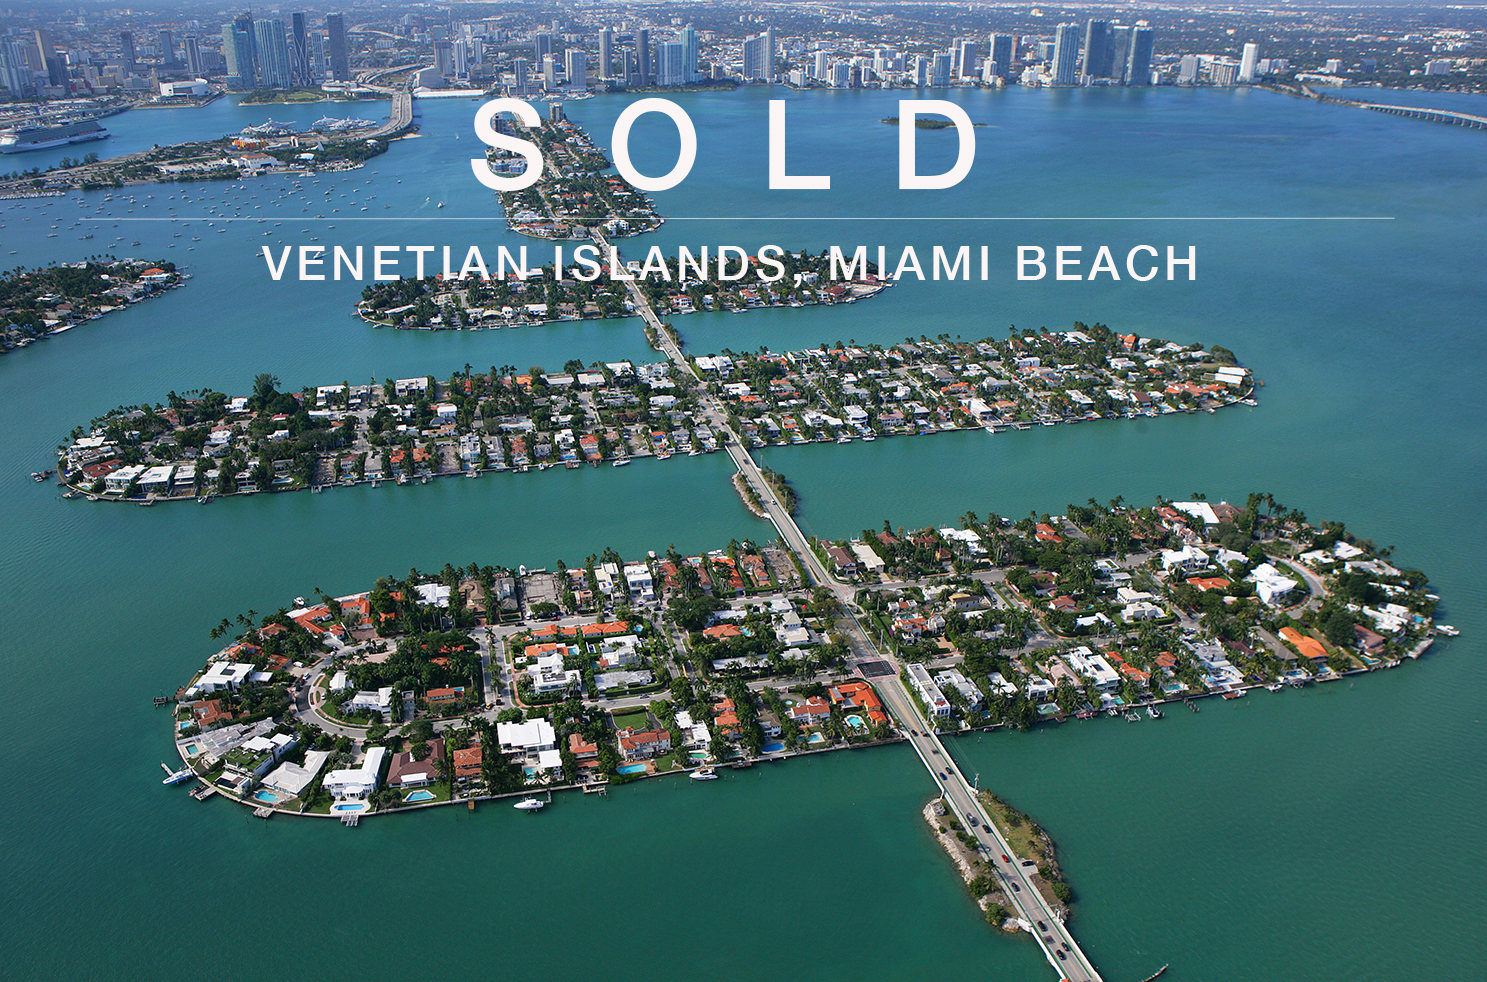 Sold Waterfront Homes on Venetian Islands in Miami Beach by Top Realtor Nelson Gonzalez